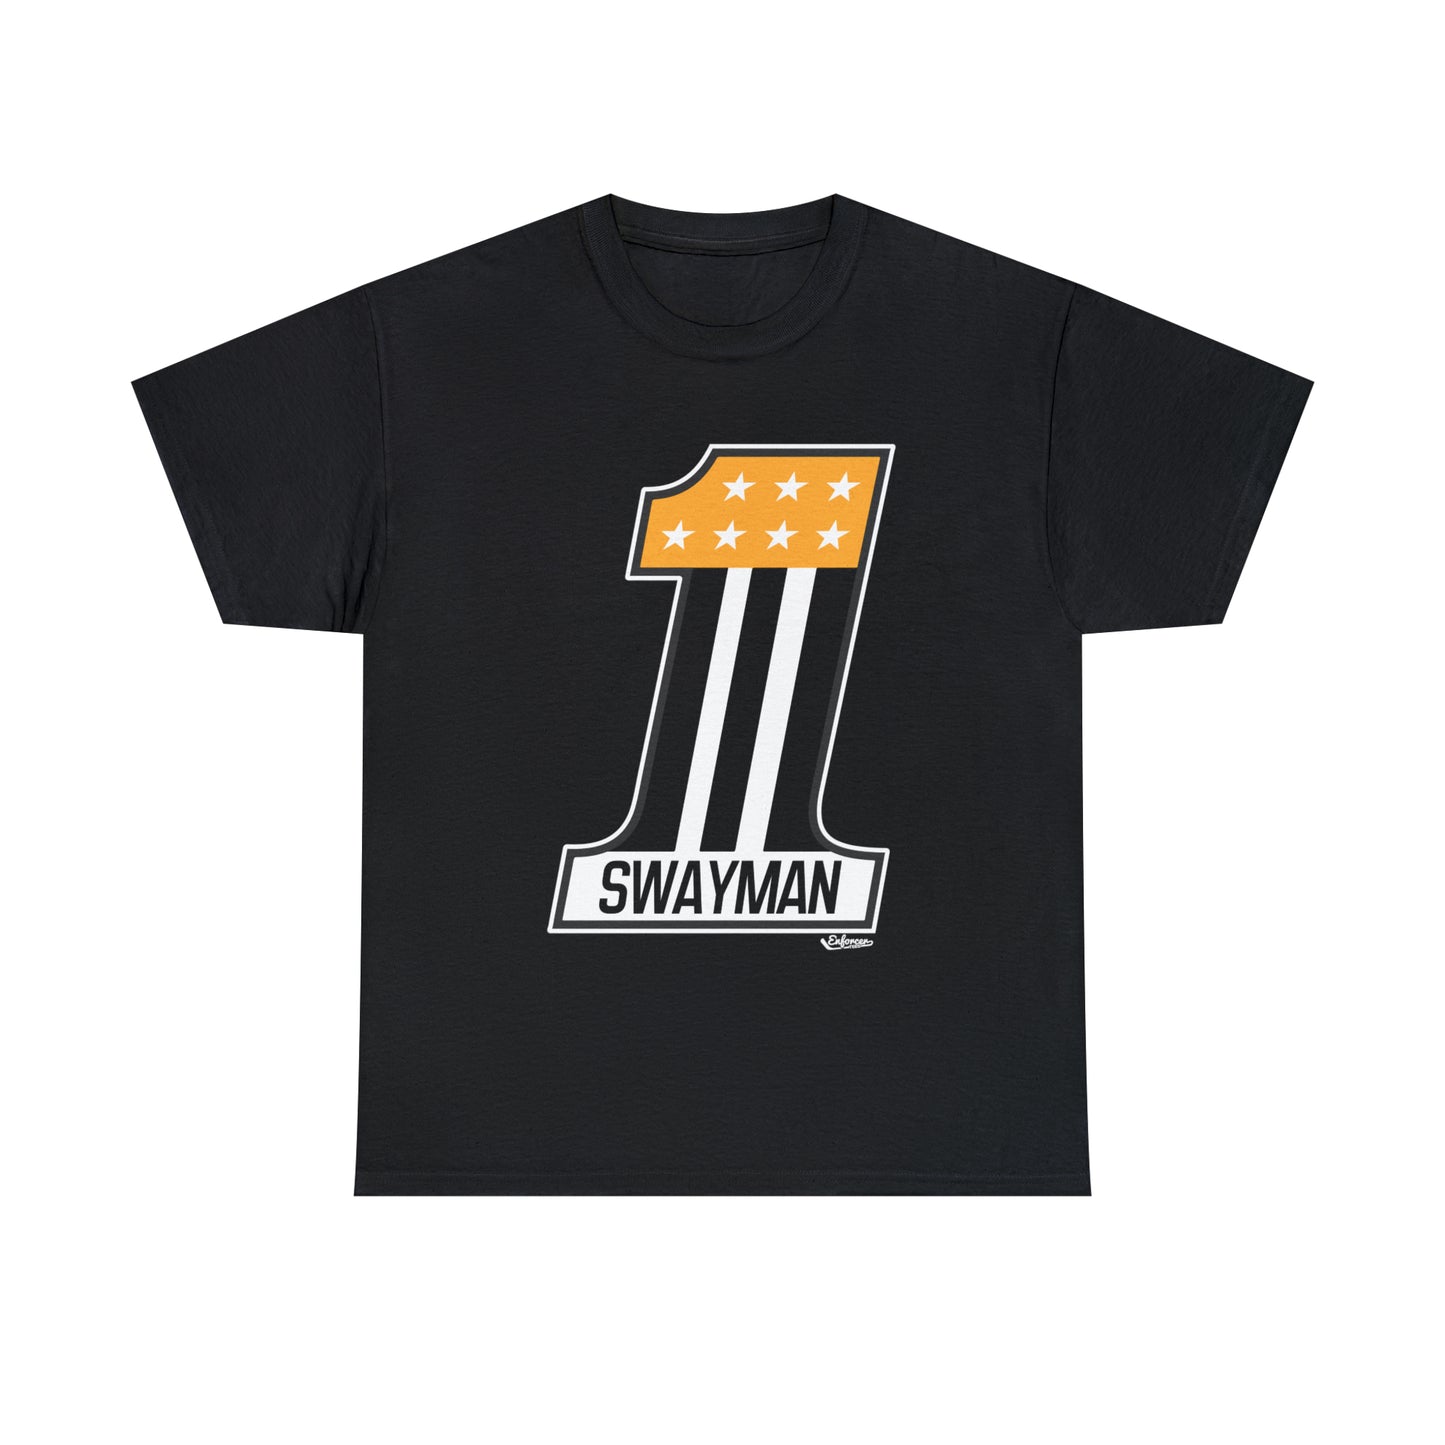 Jeremy Swayman Davidson #1 T-Shirt